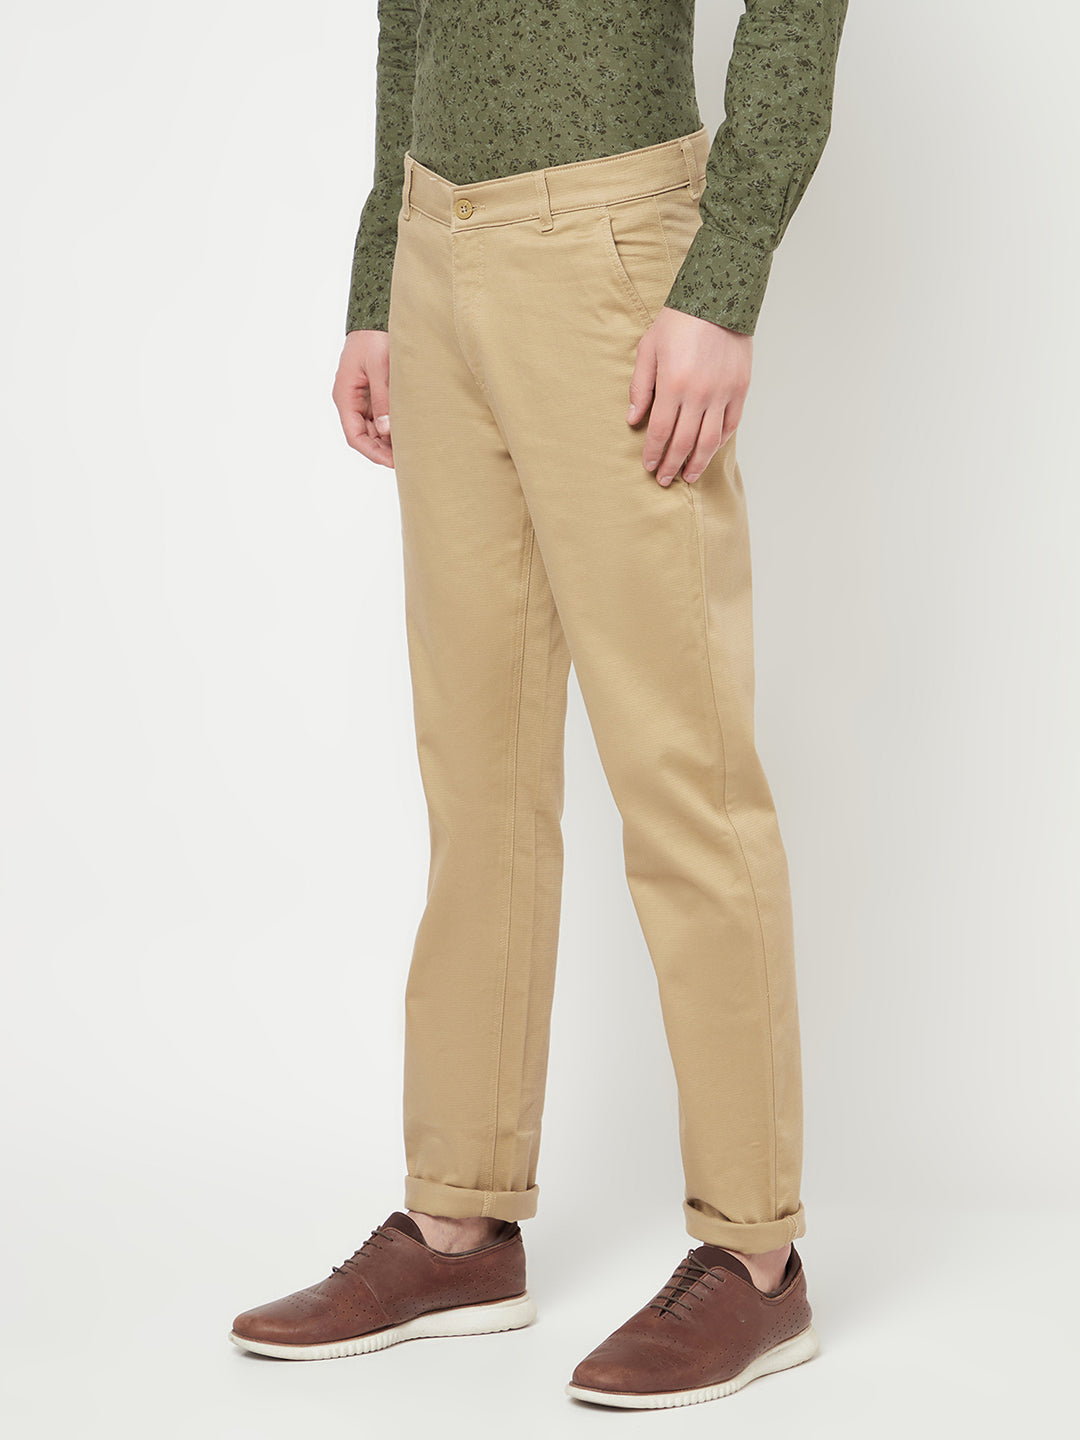 Beige Casual Trousers - Men Trousers